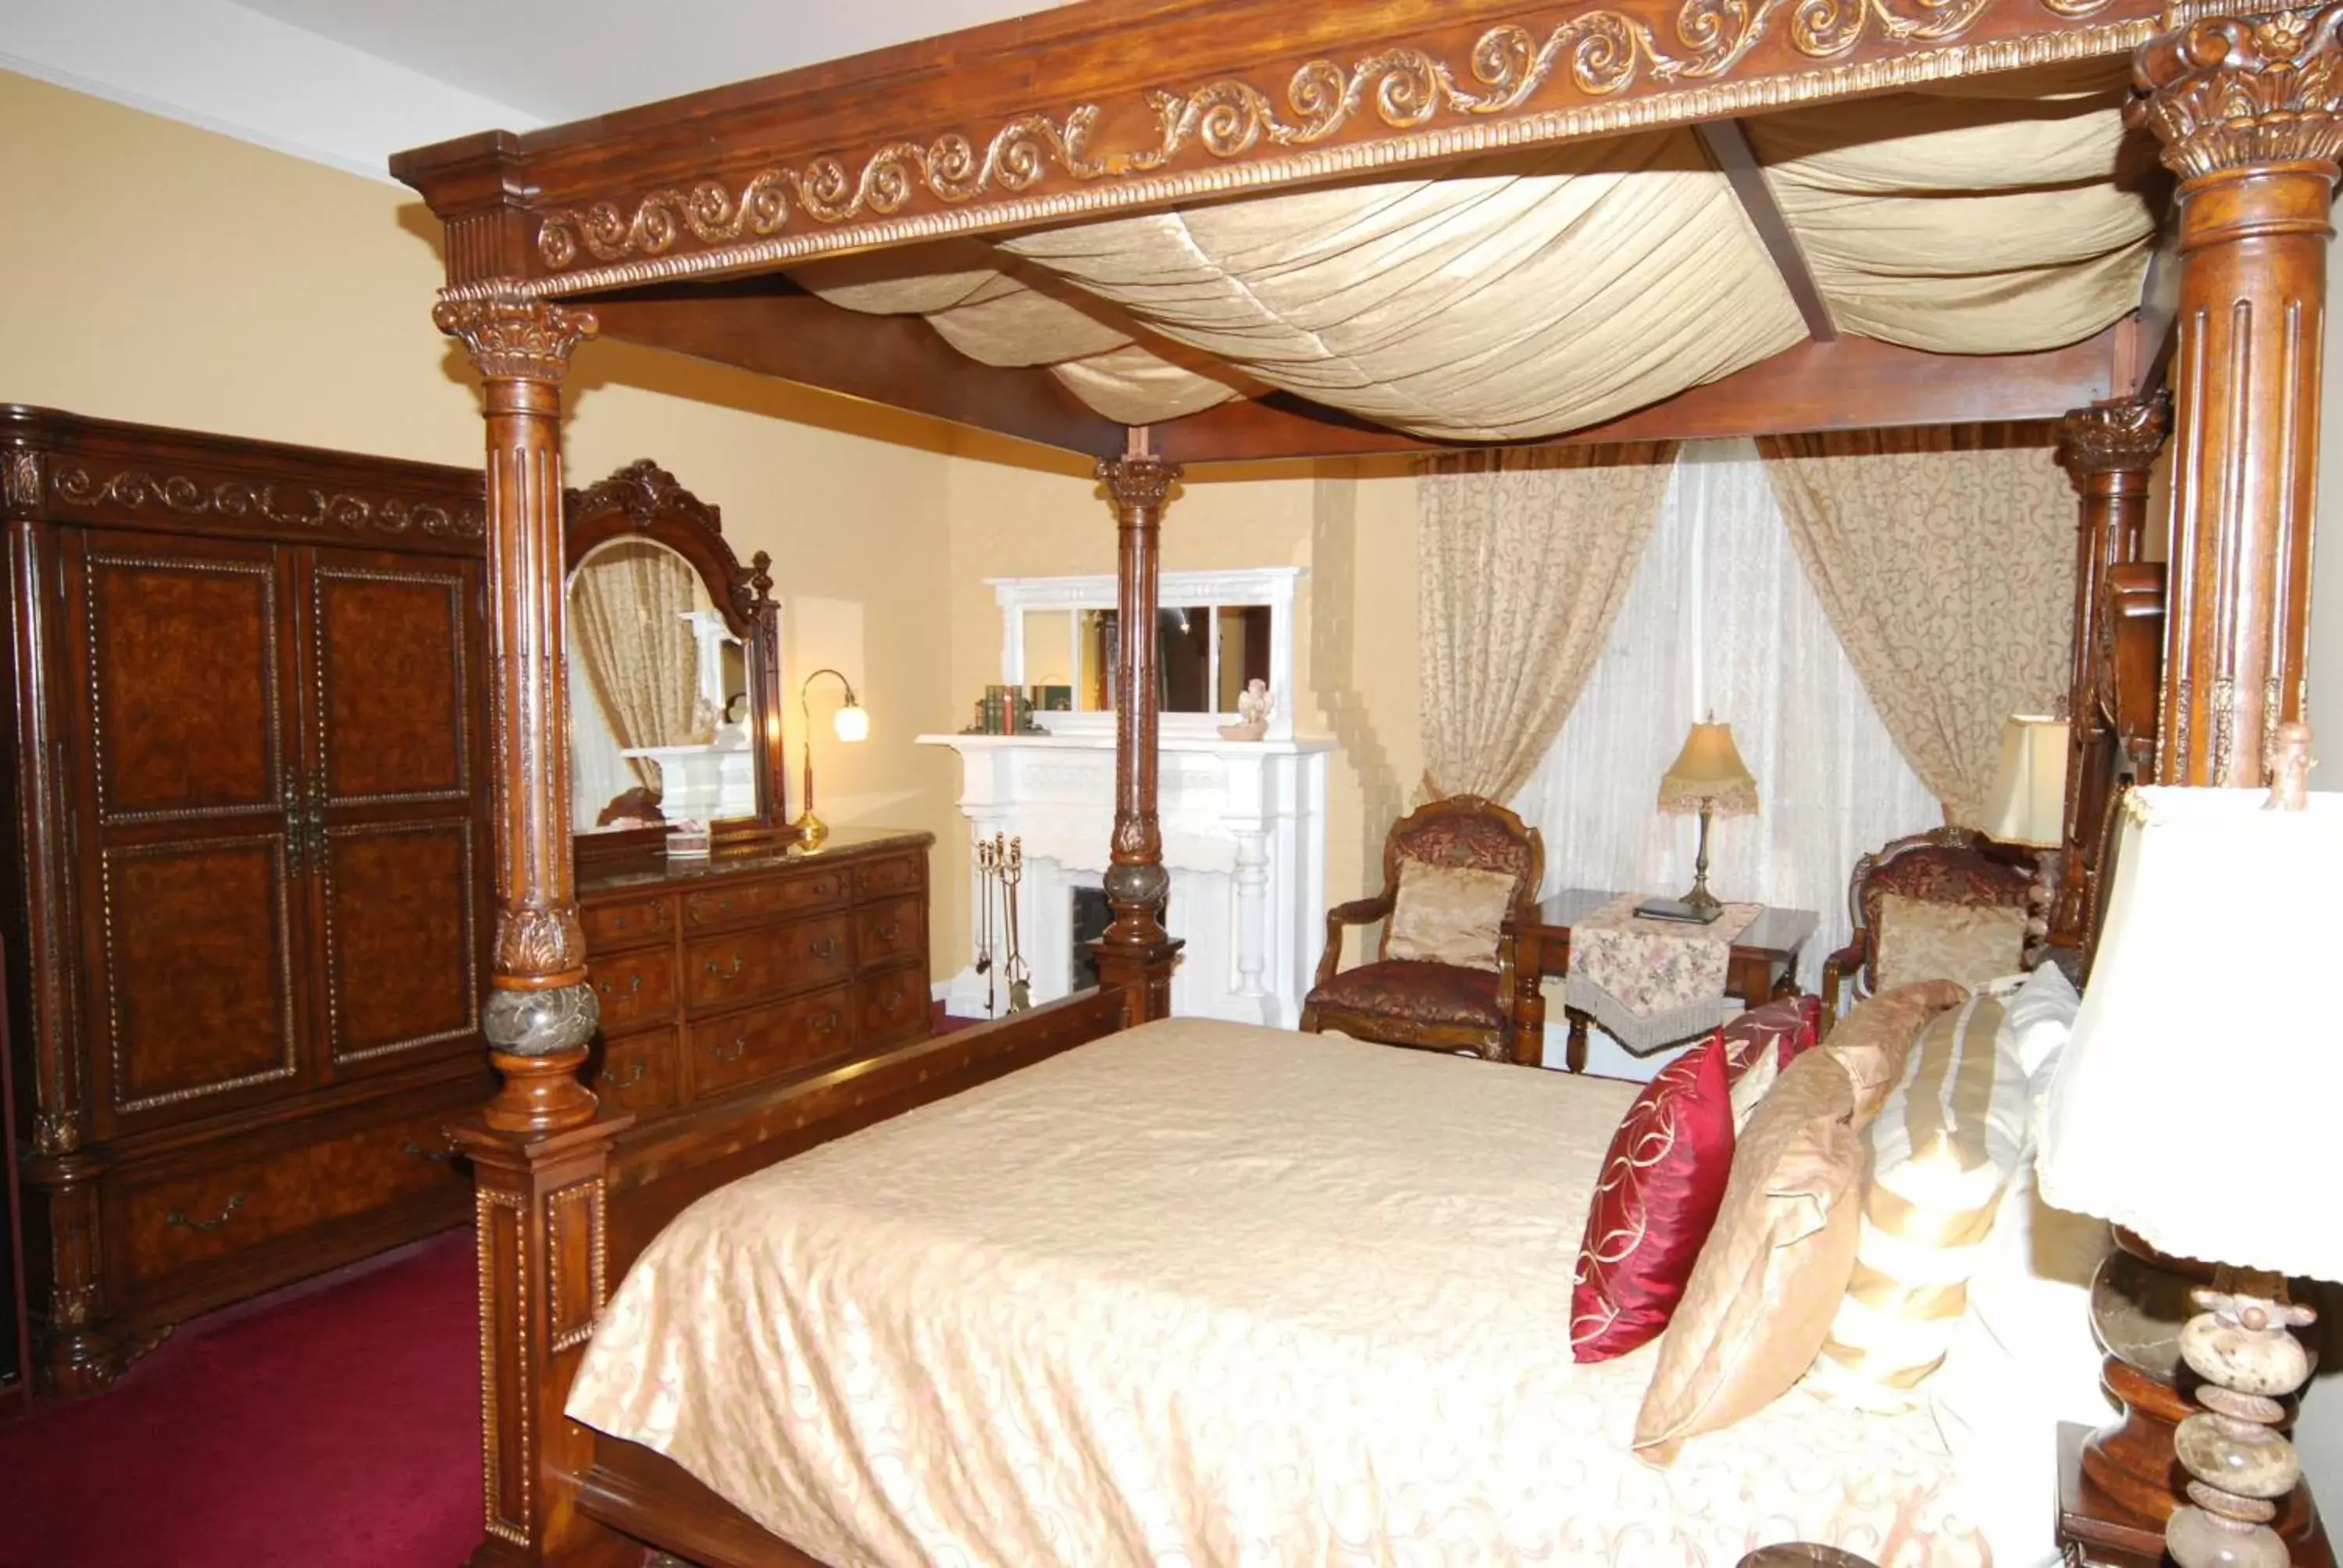 Bed in Queen Anne